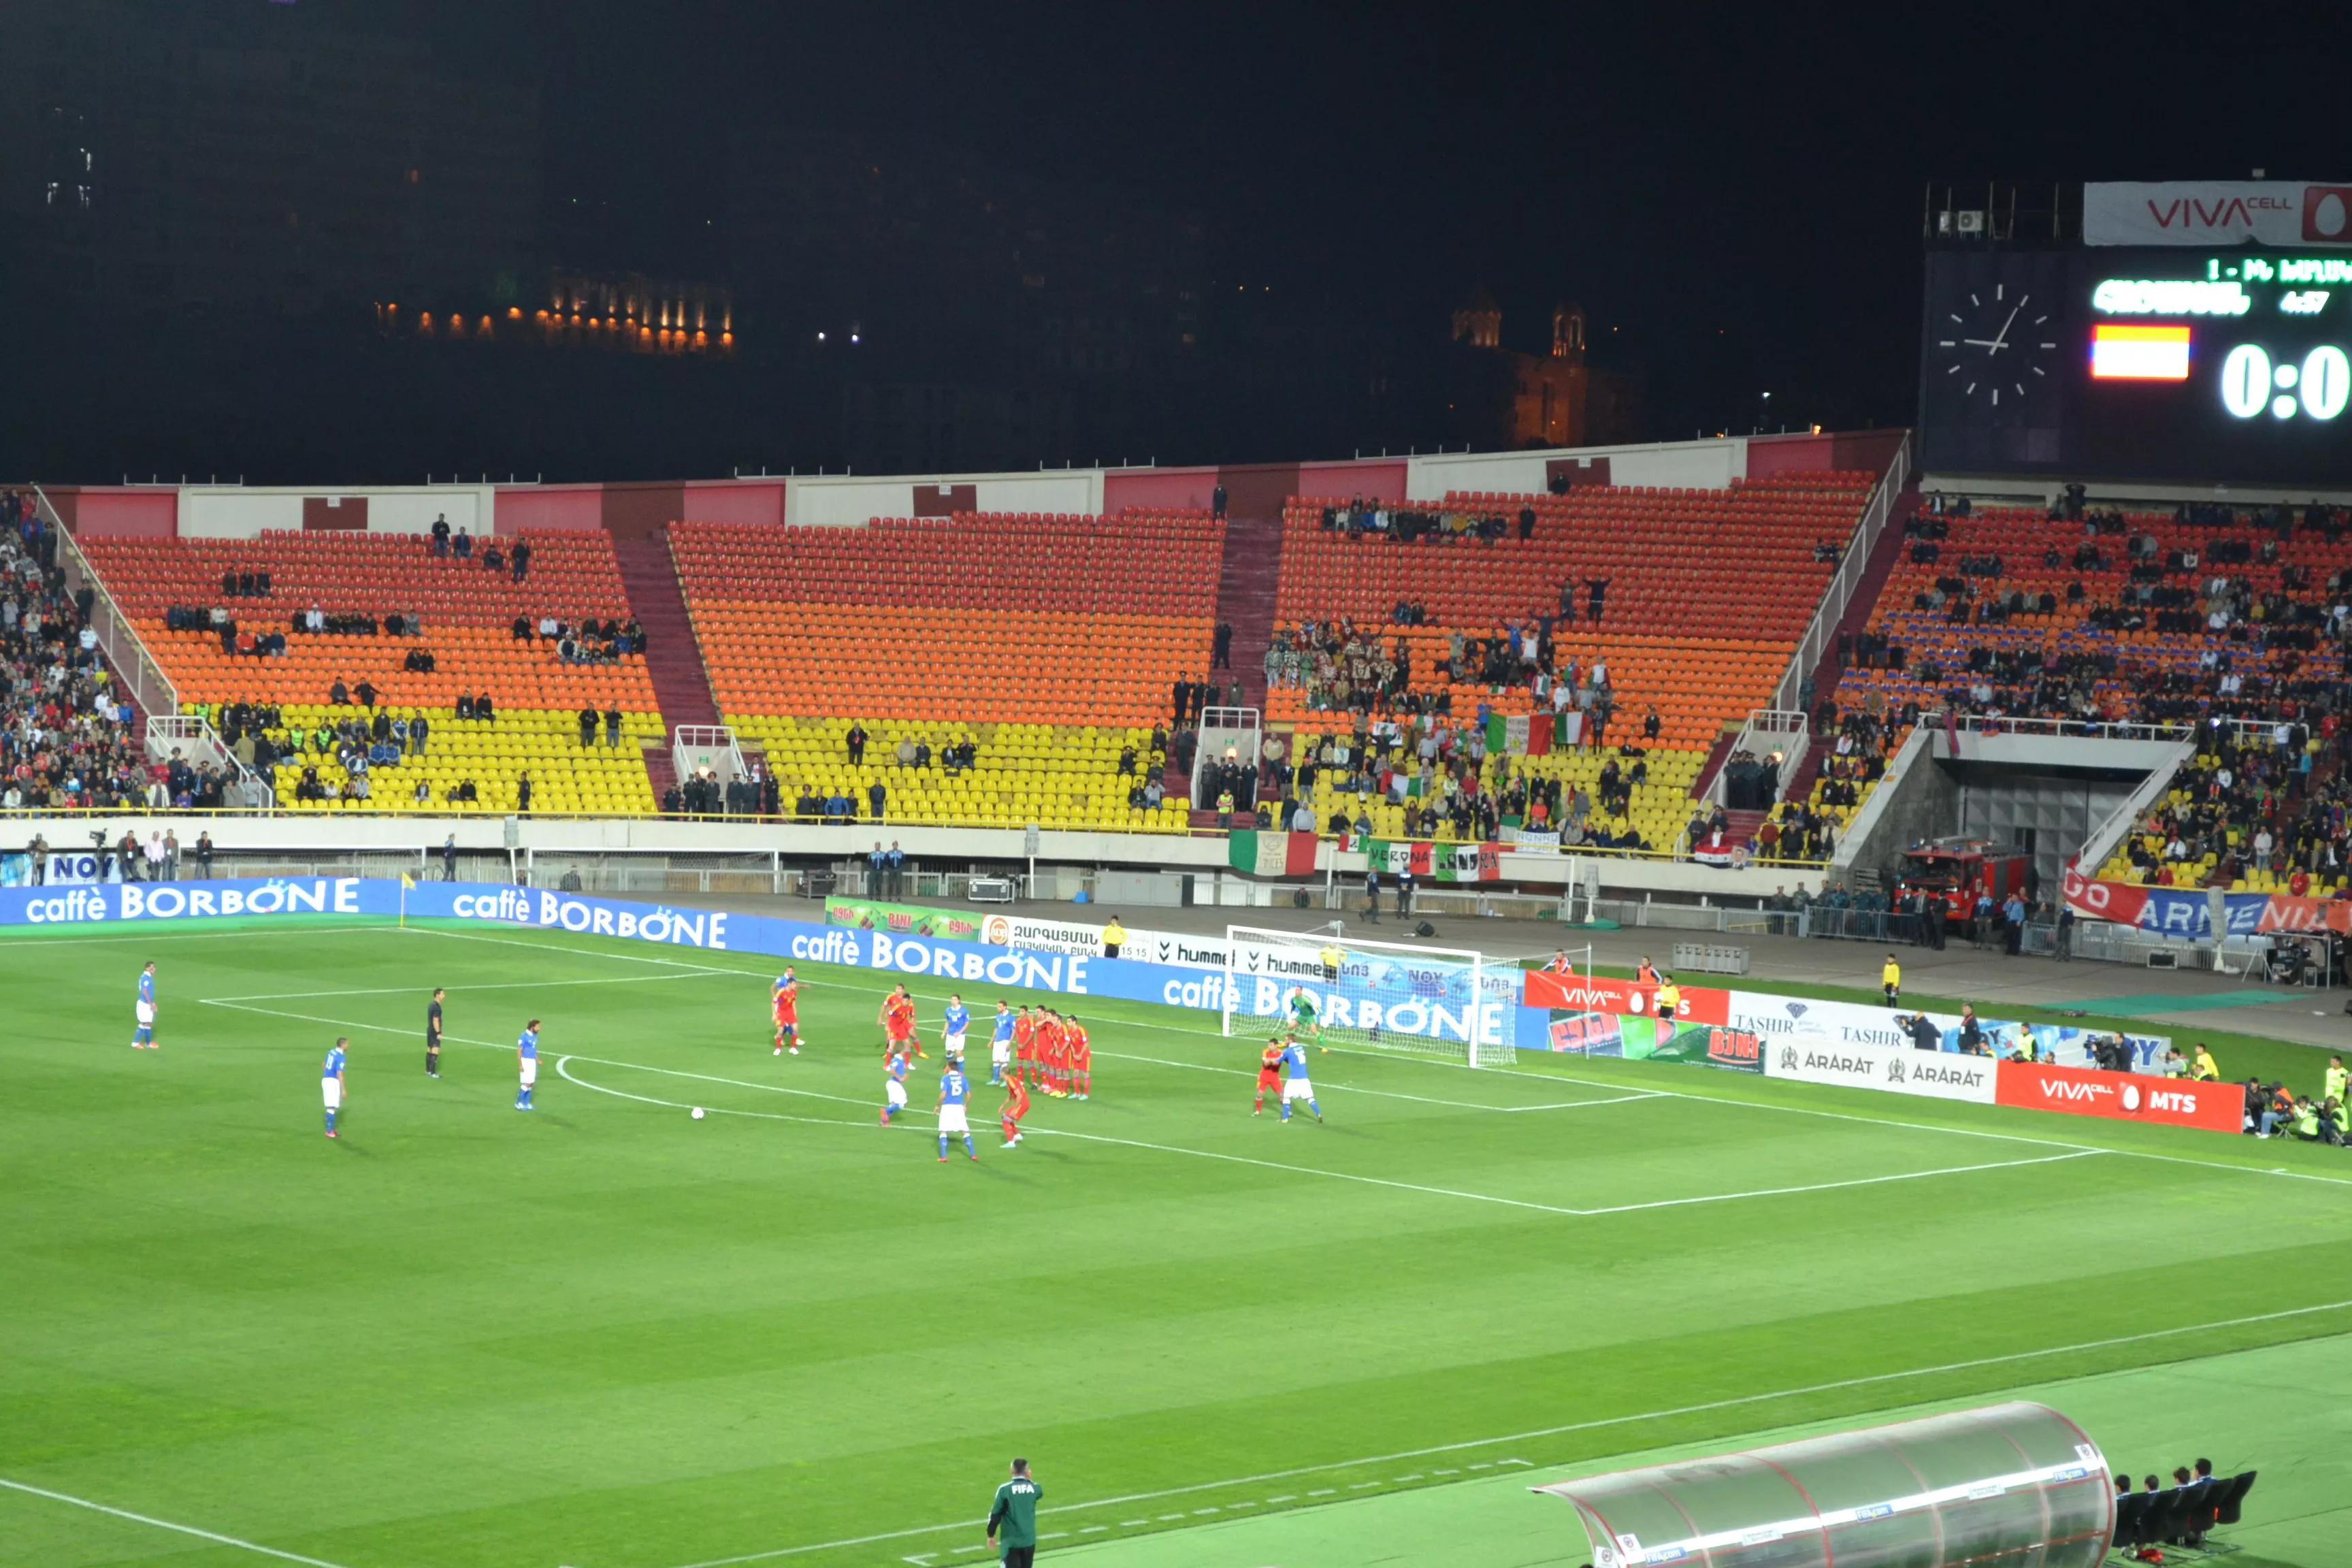 Hrazdan Stadium in Armenia, Middle East | Football - Rated 0.8